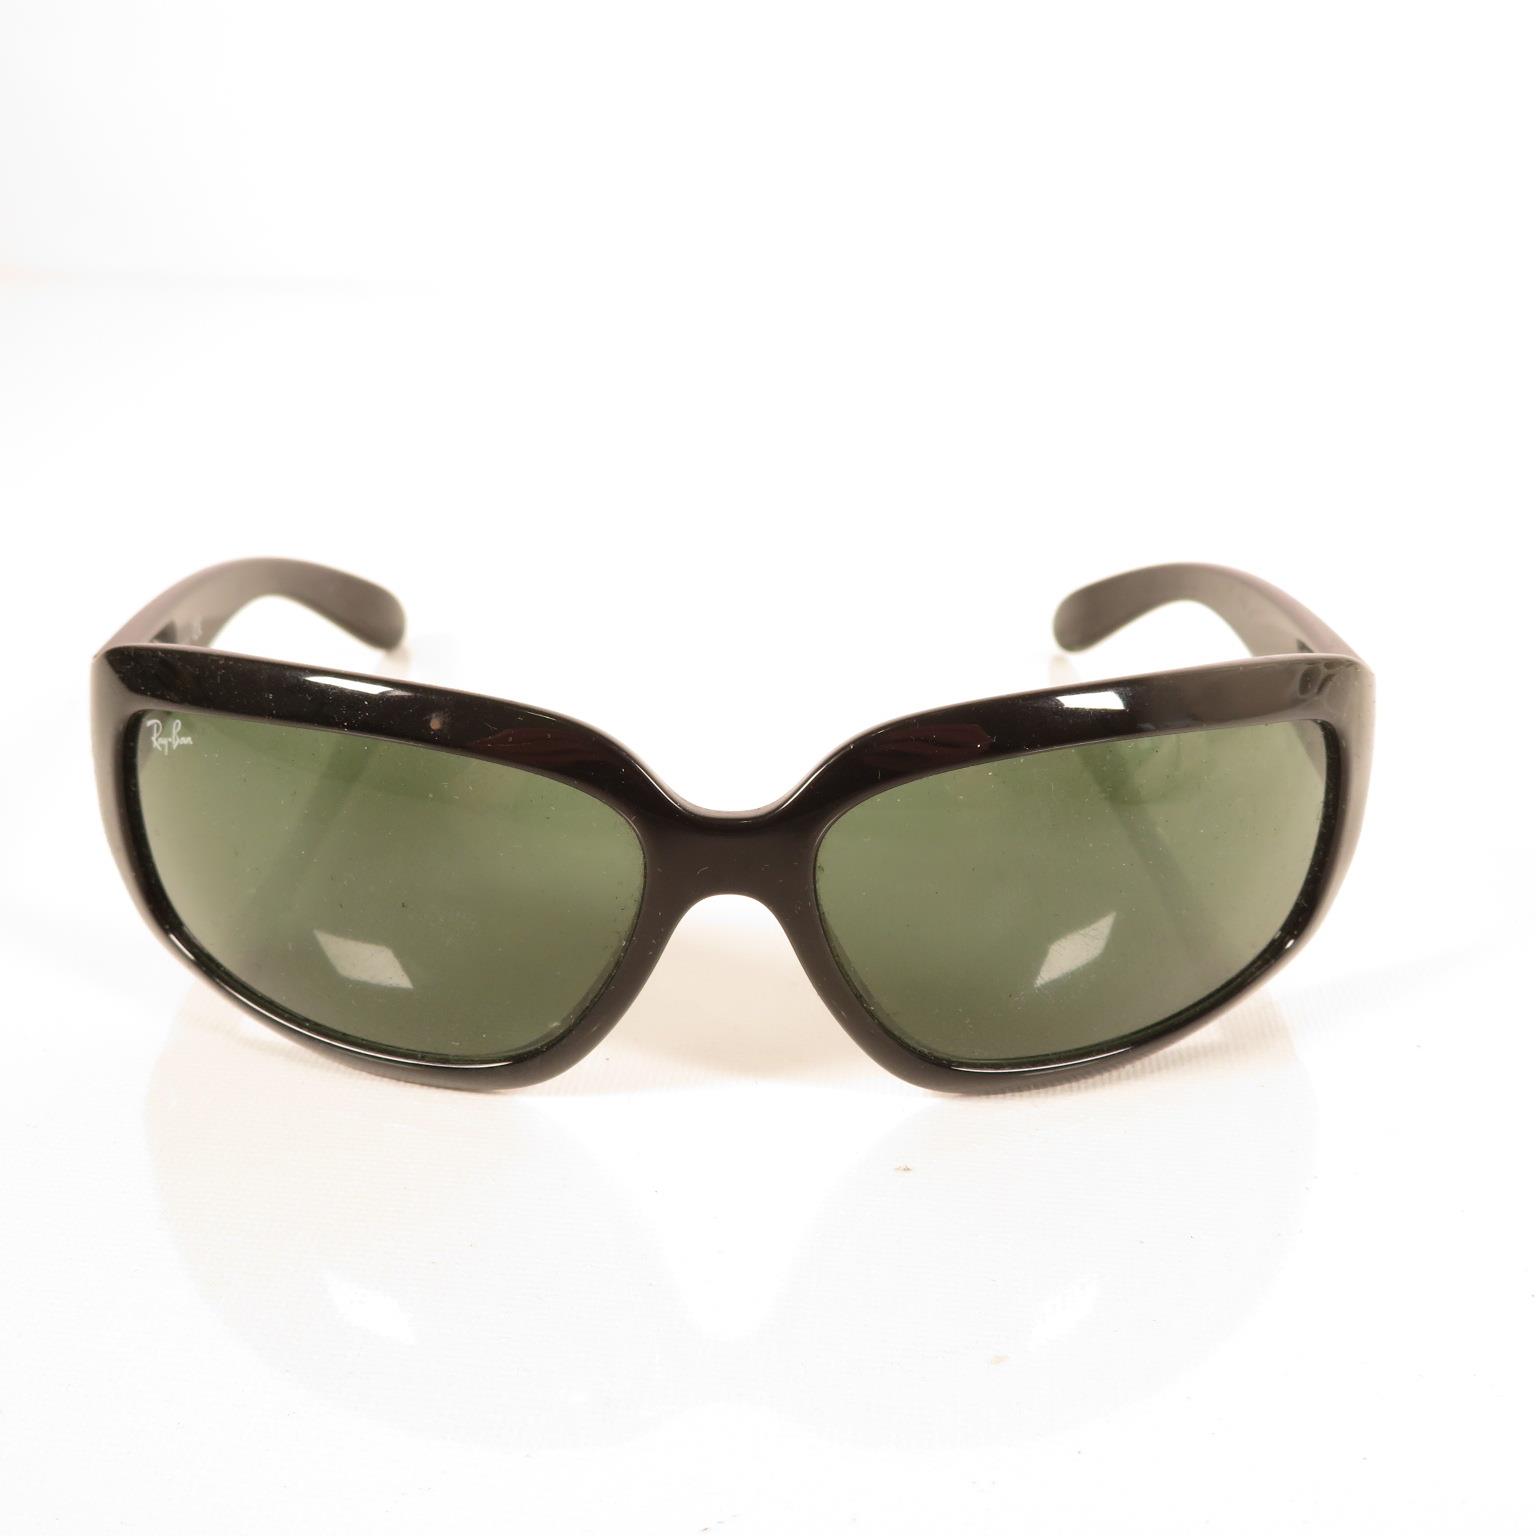 5x sets of Ray Ban sunglasses - - Image 15 of 23